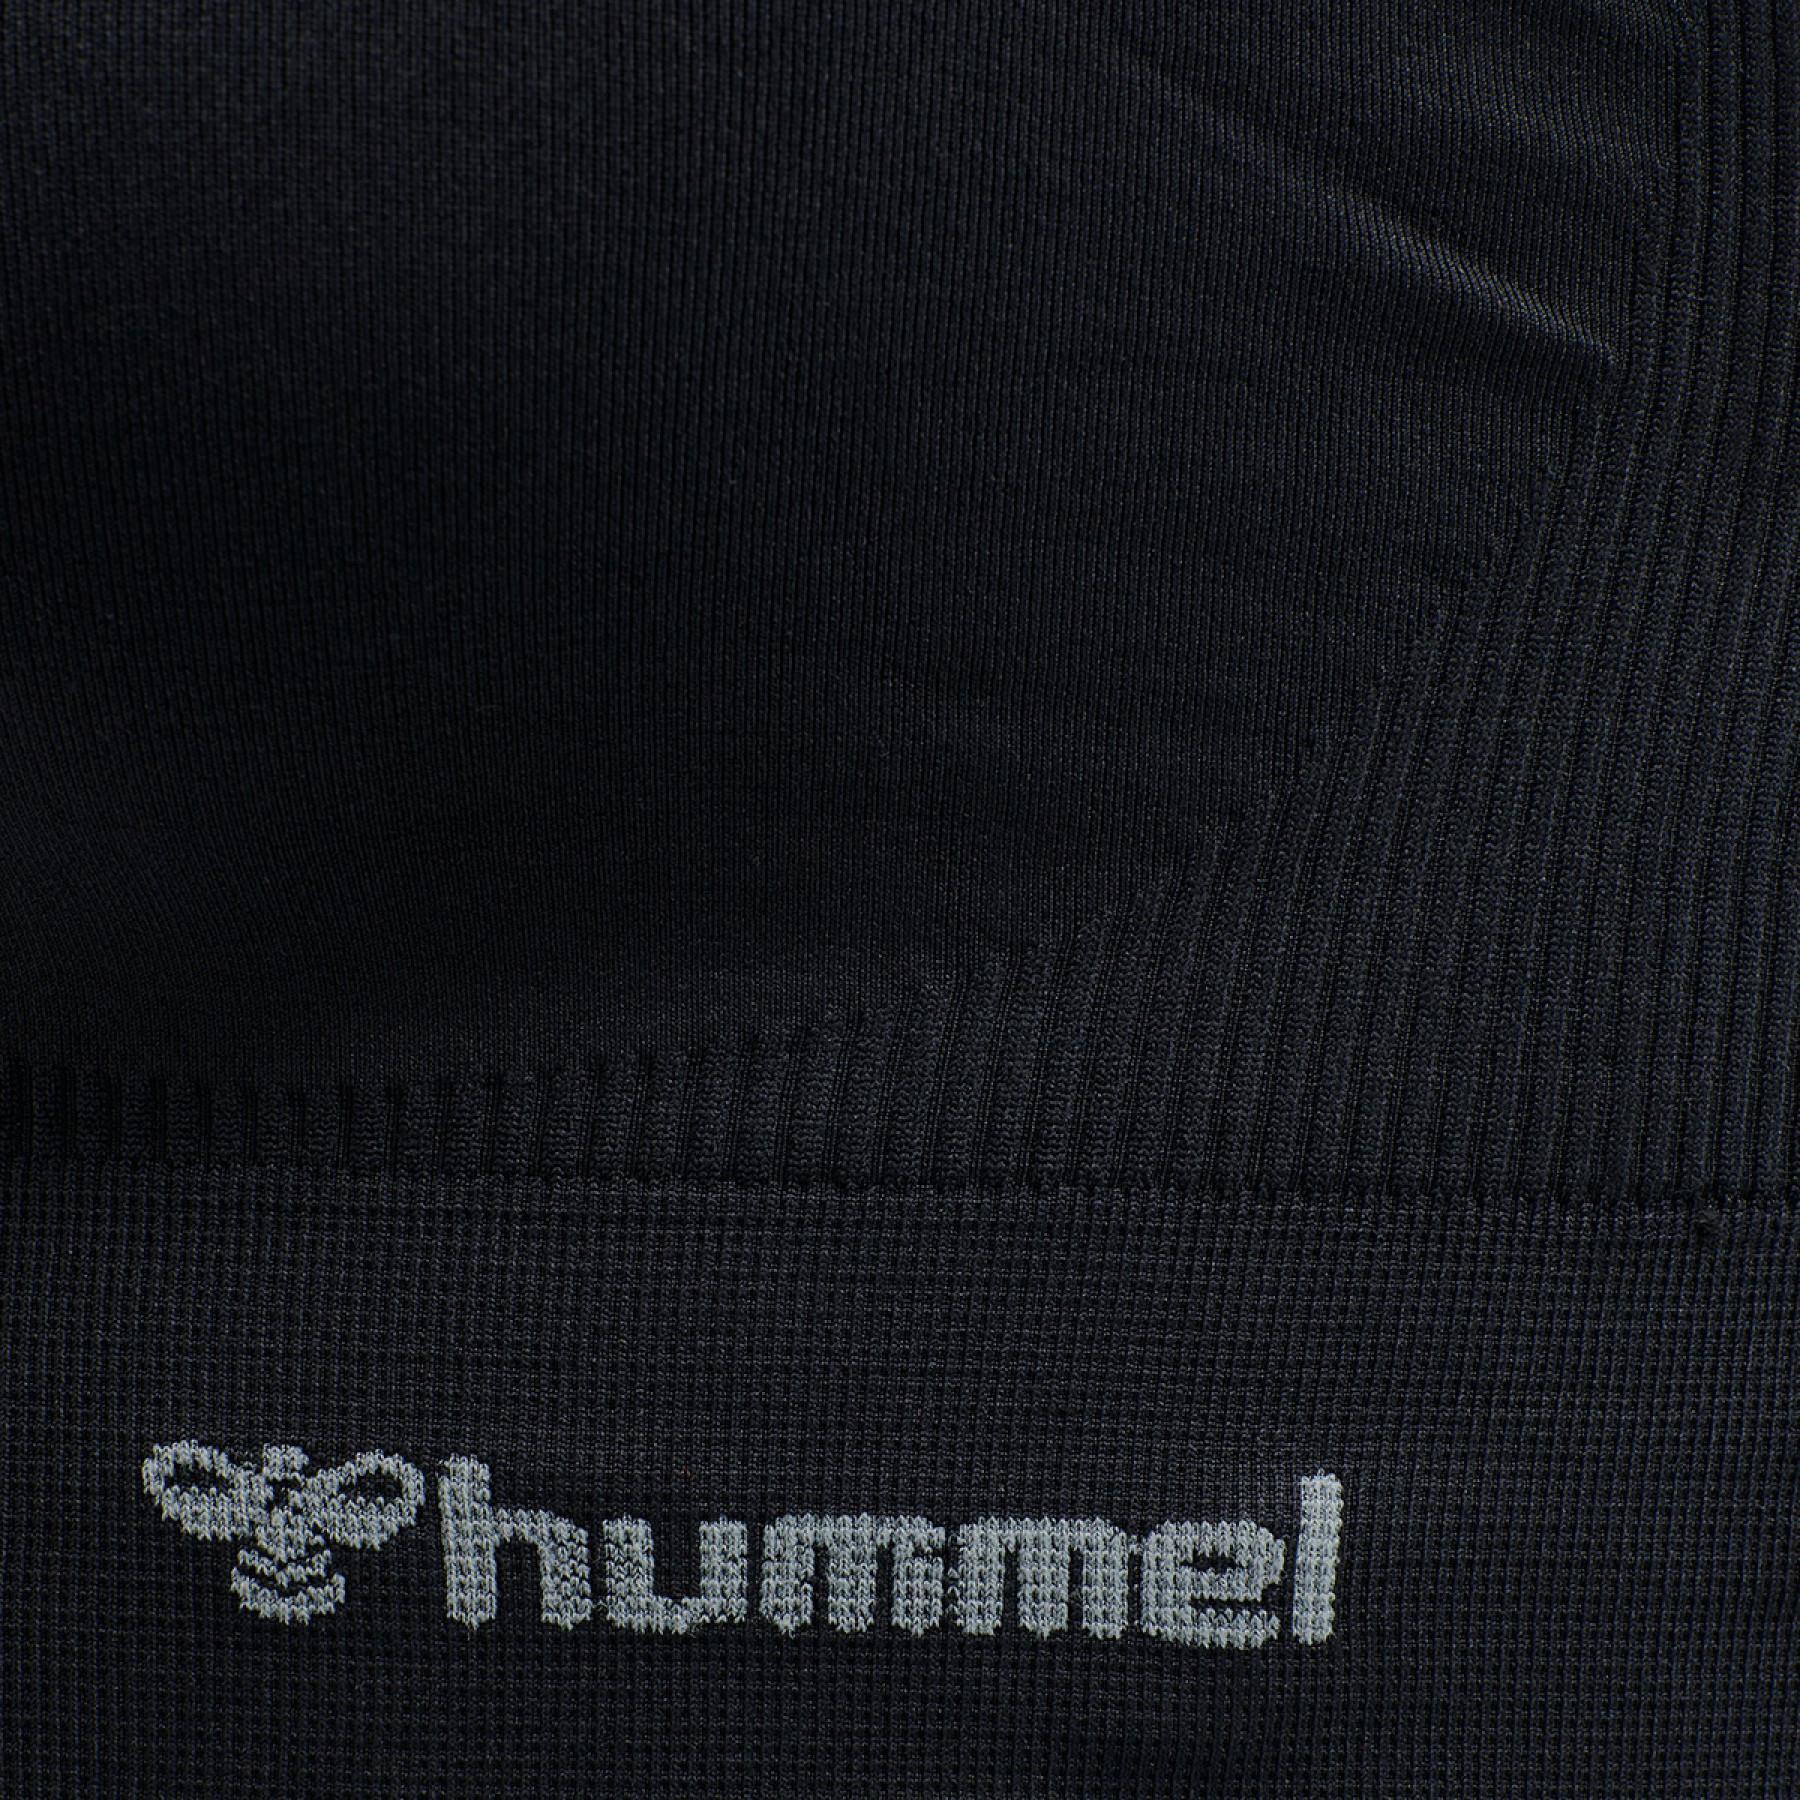 Women's bra Hummel hmltif